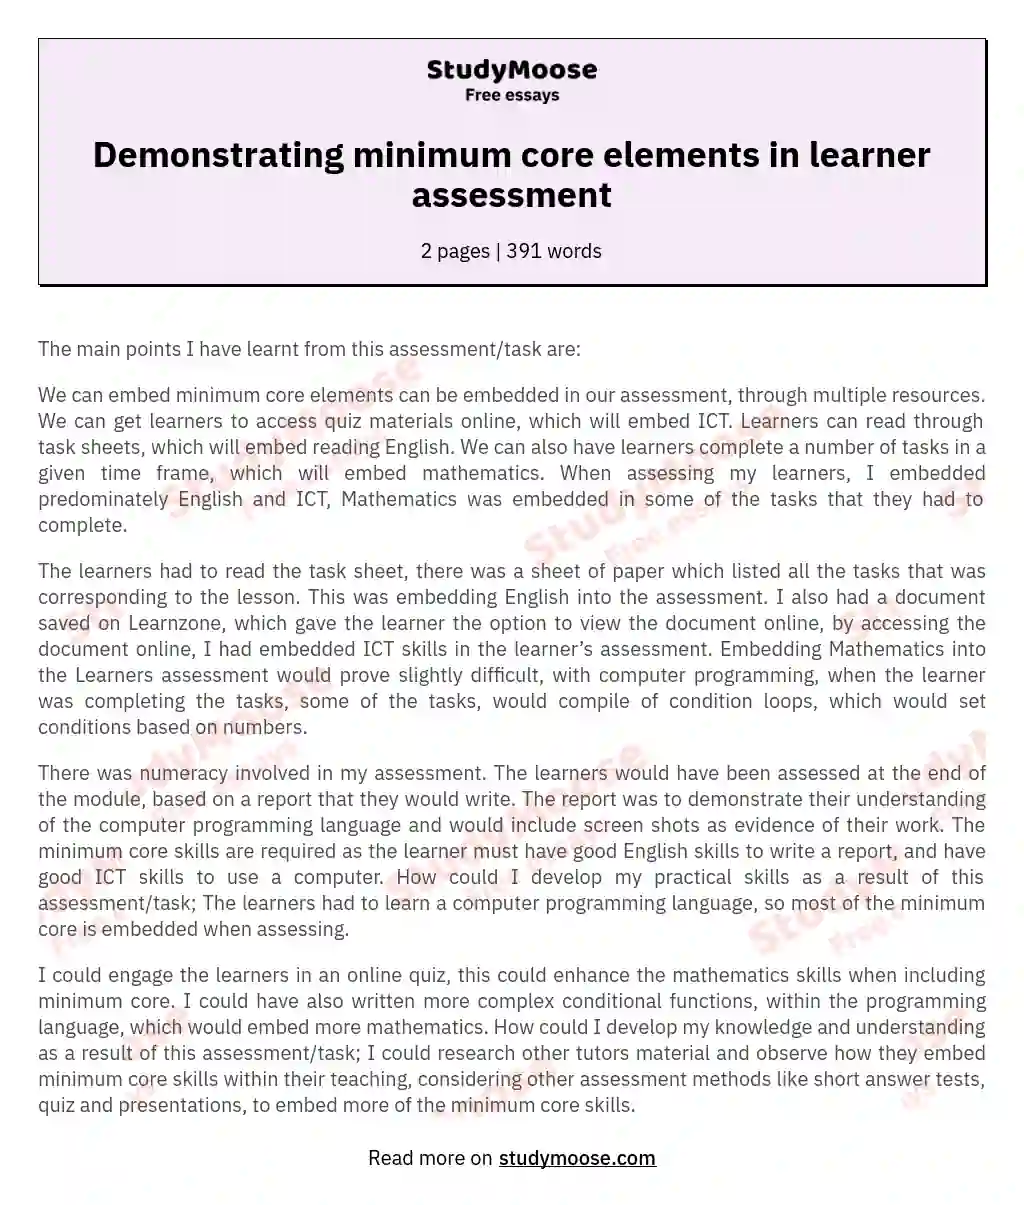 Demonstrating minimum core elements in learner assessment essay